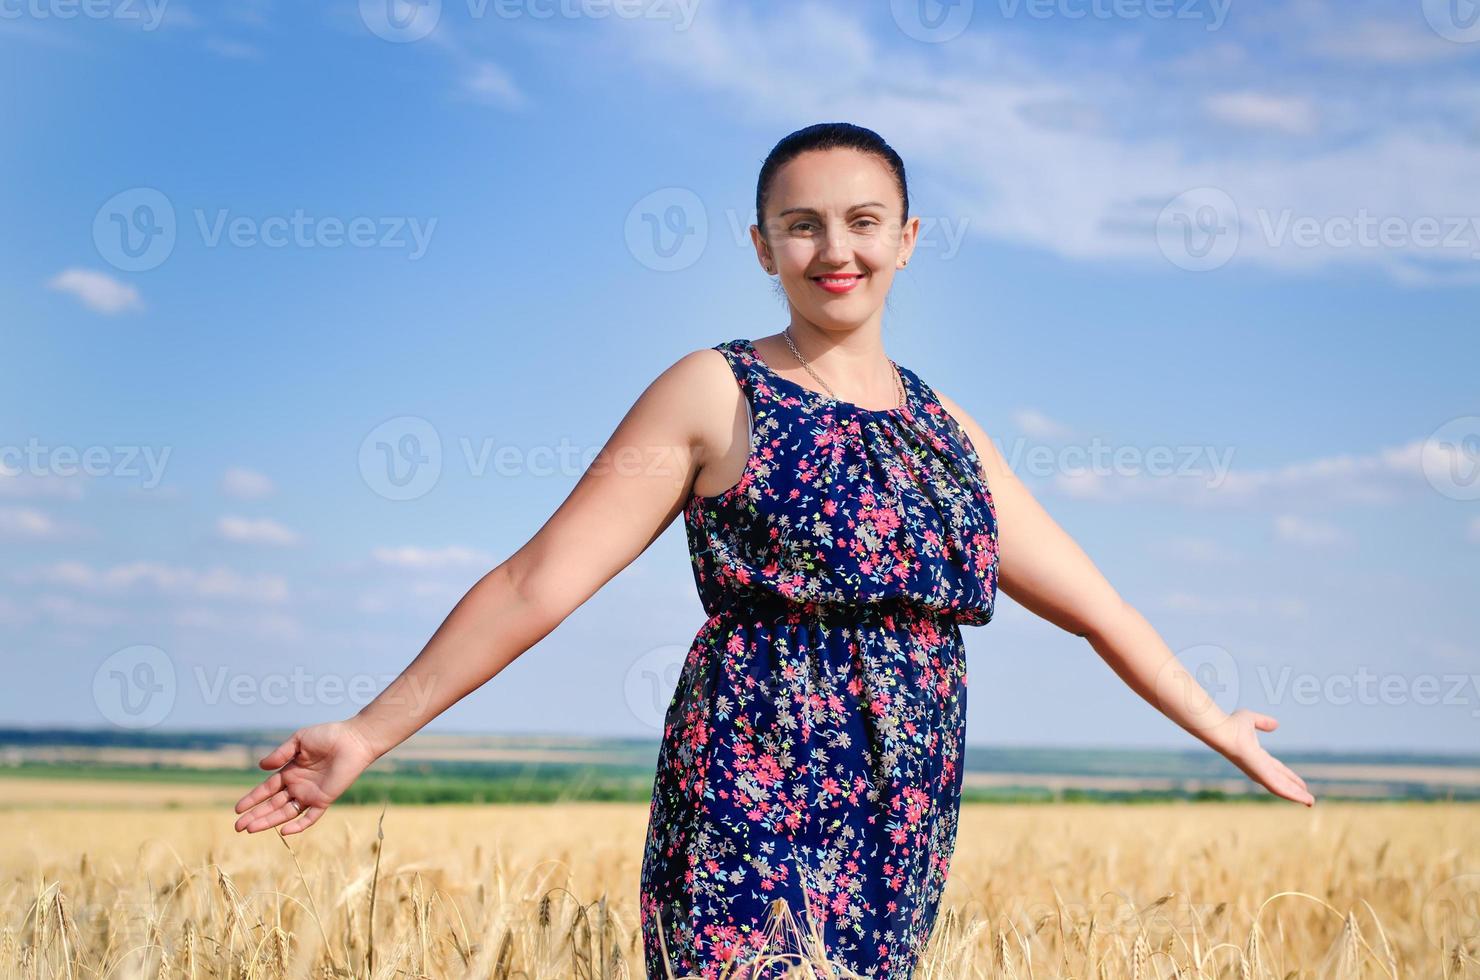 kvinna stående njuter av solen i ett vetefält foto